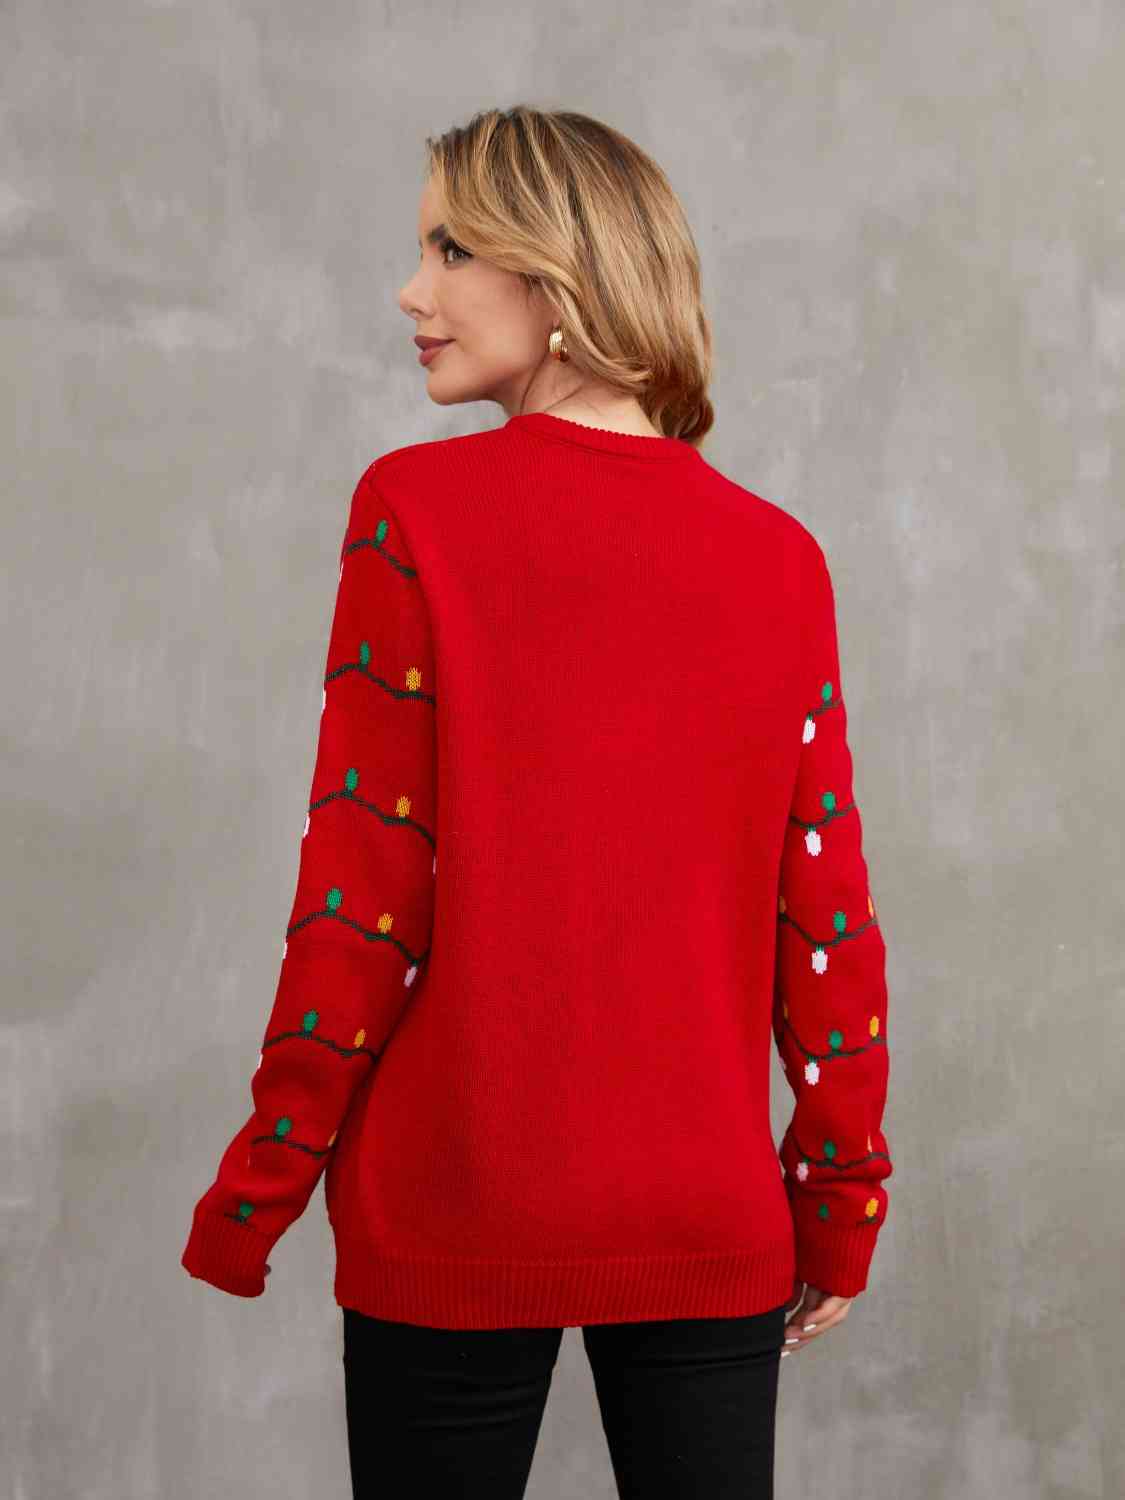 Bold Knit Christmas Tree Lights Round Neck Classy Holiday Winter Sweater